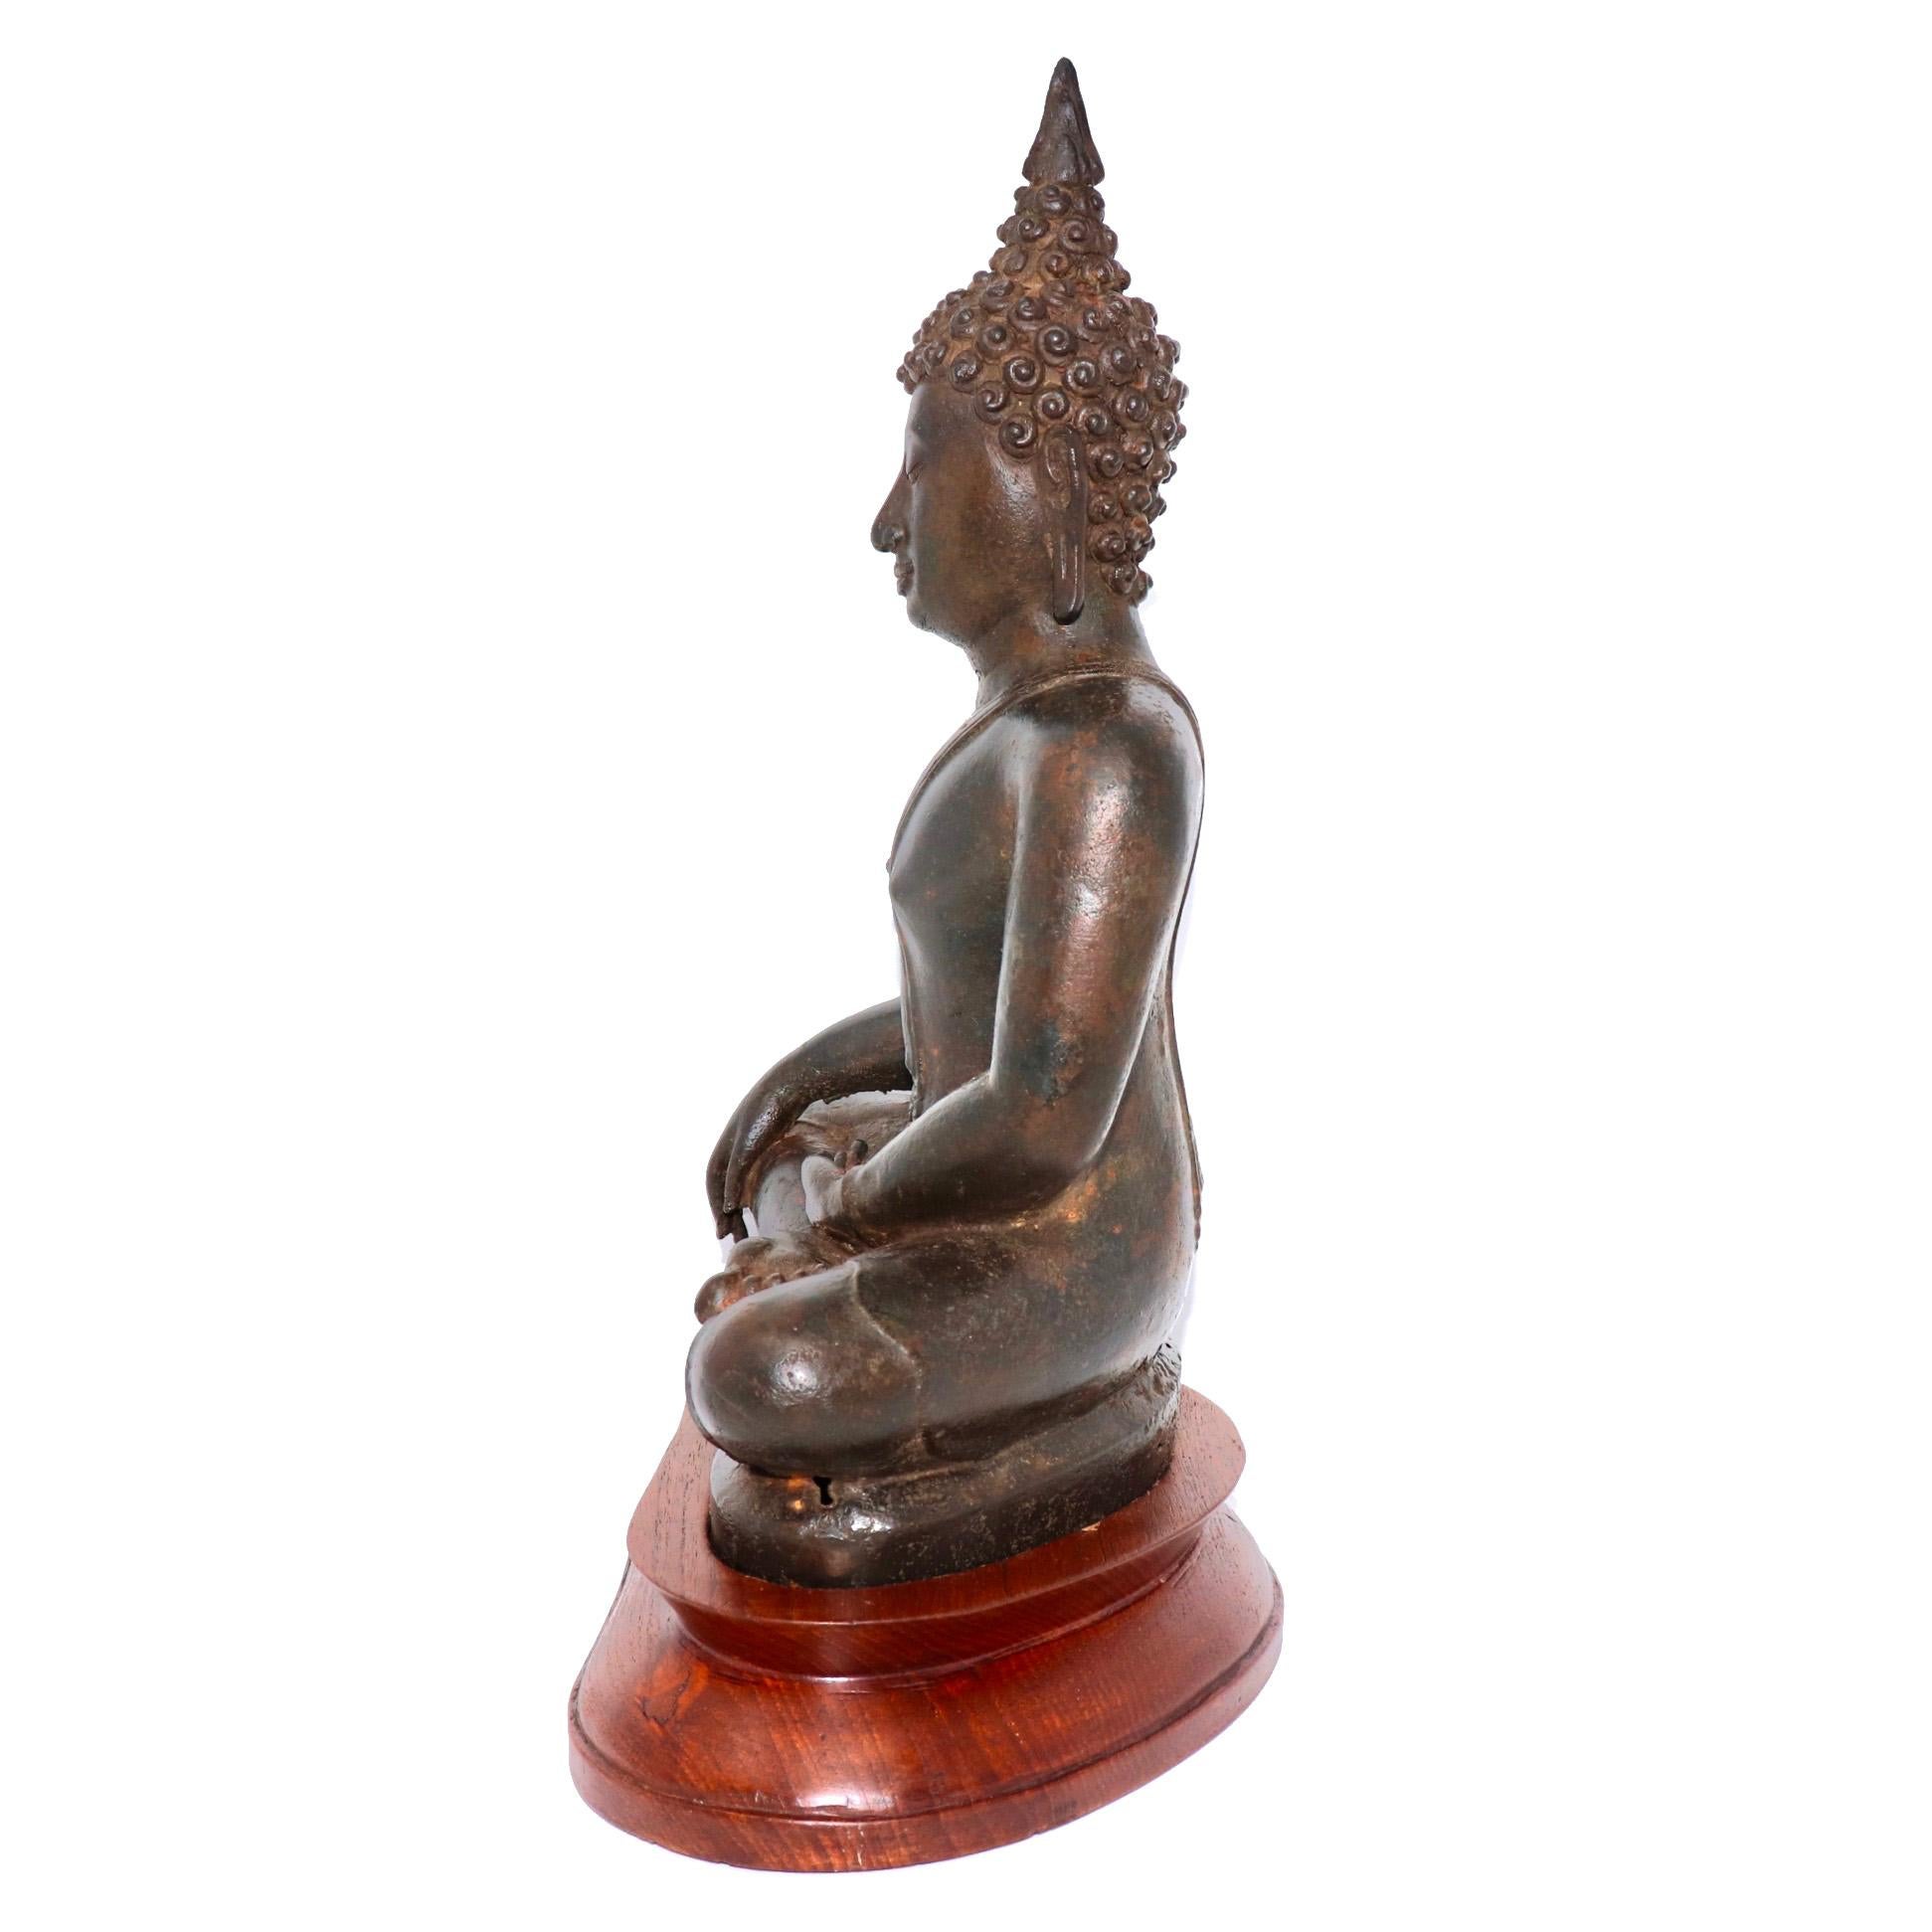 18th Century and Earlier Thai Ayutthaya Bronze Seated Buddha Figure, 14th-15th Century